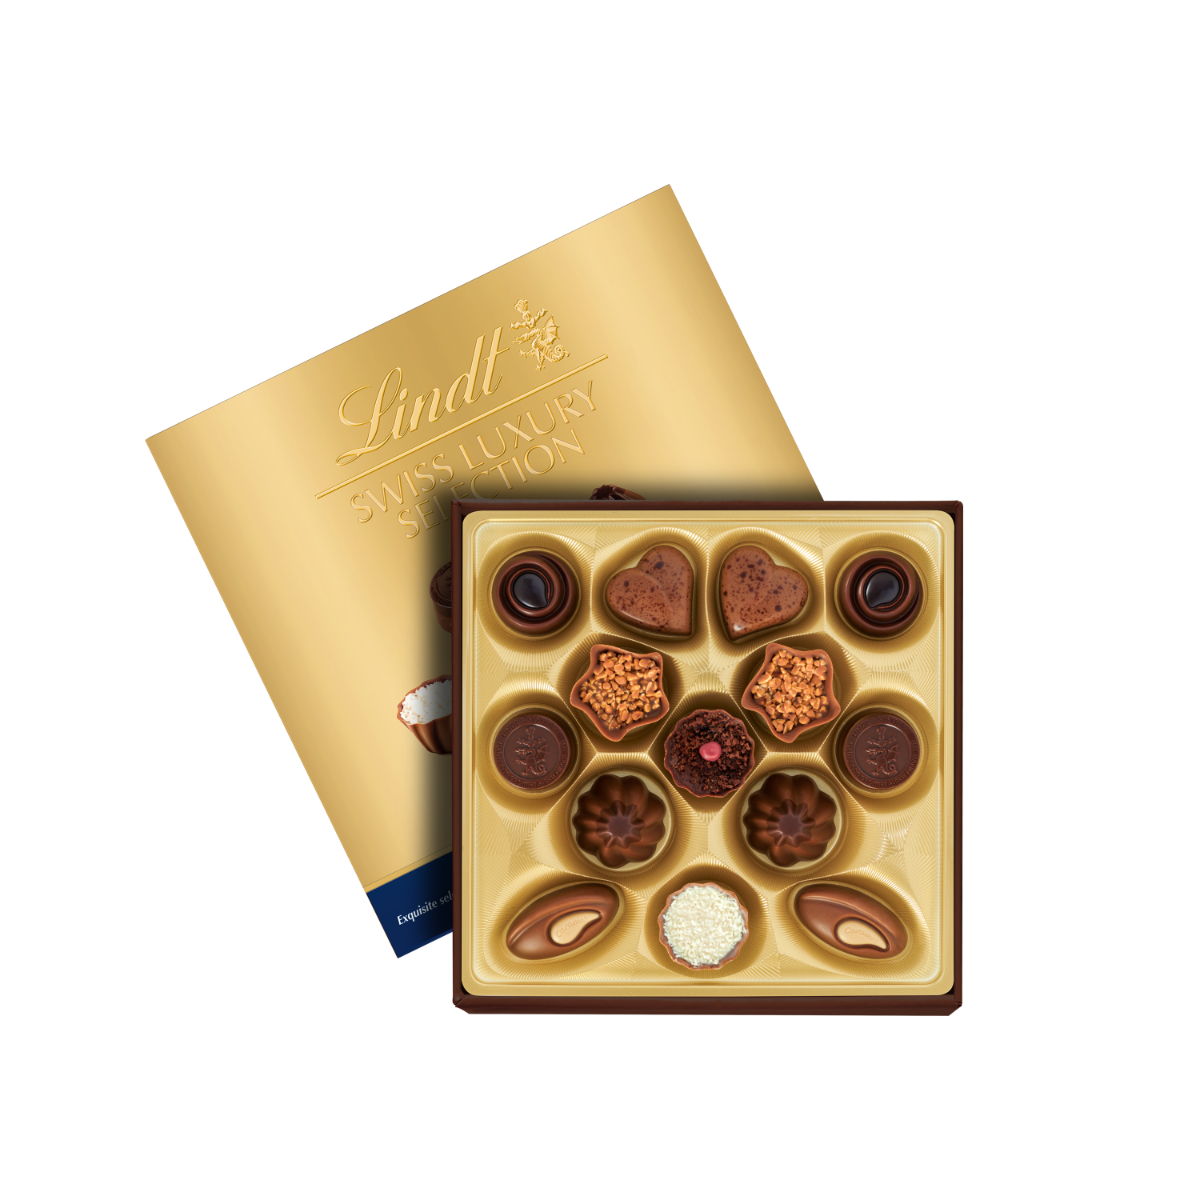 Lindt SWISS LUXURY SELECTION Chocolate Box 145g